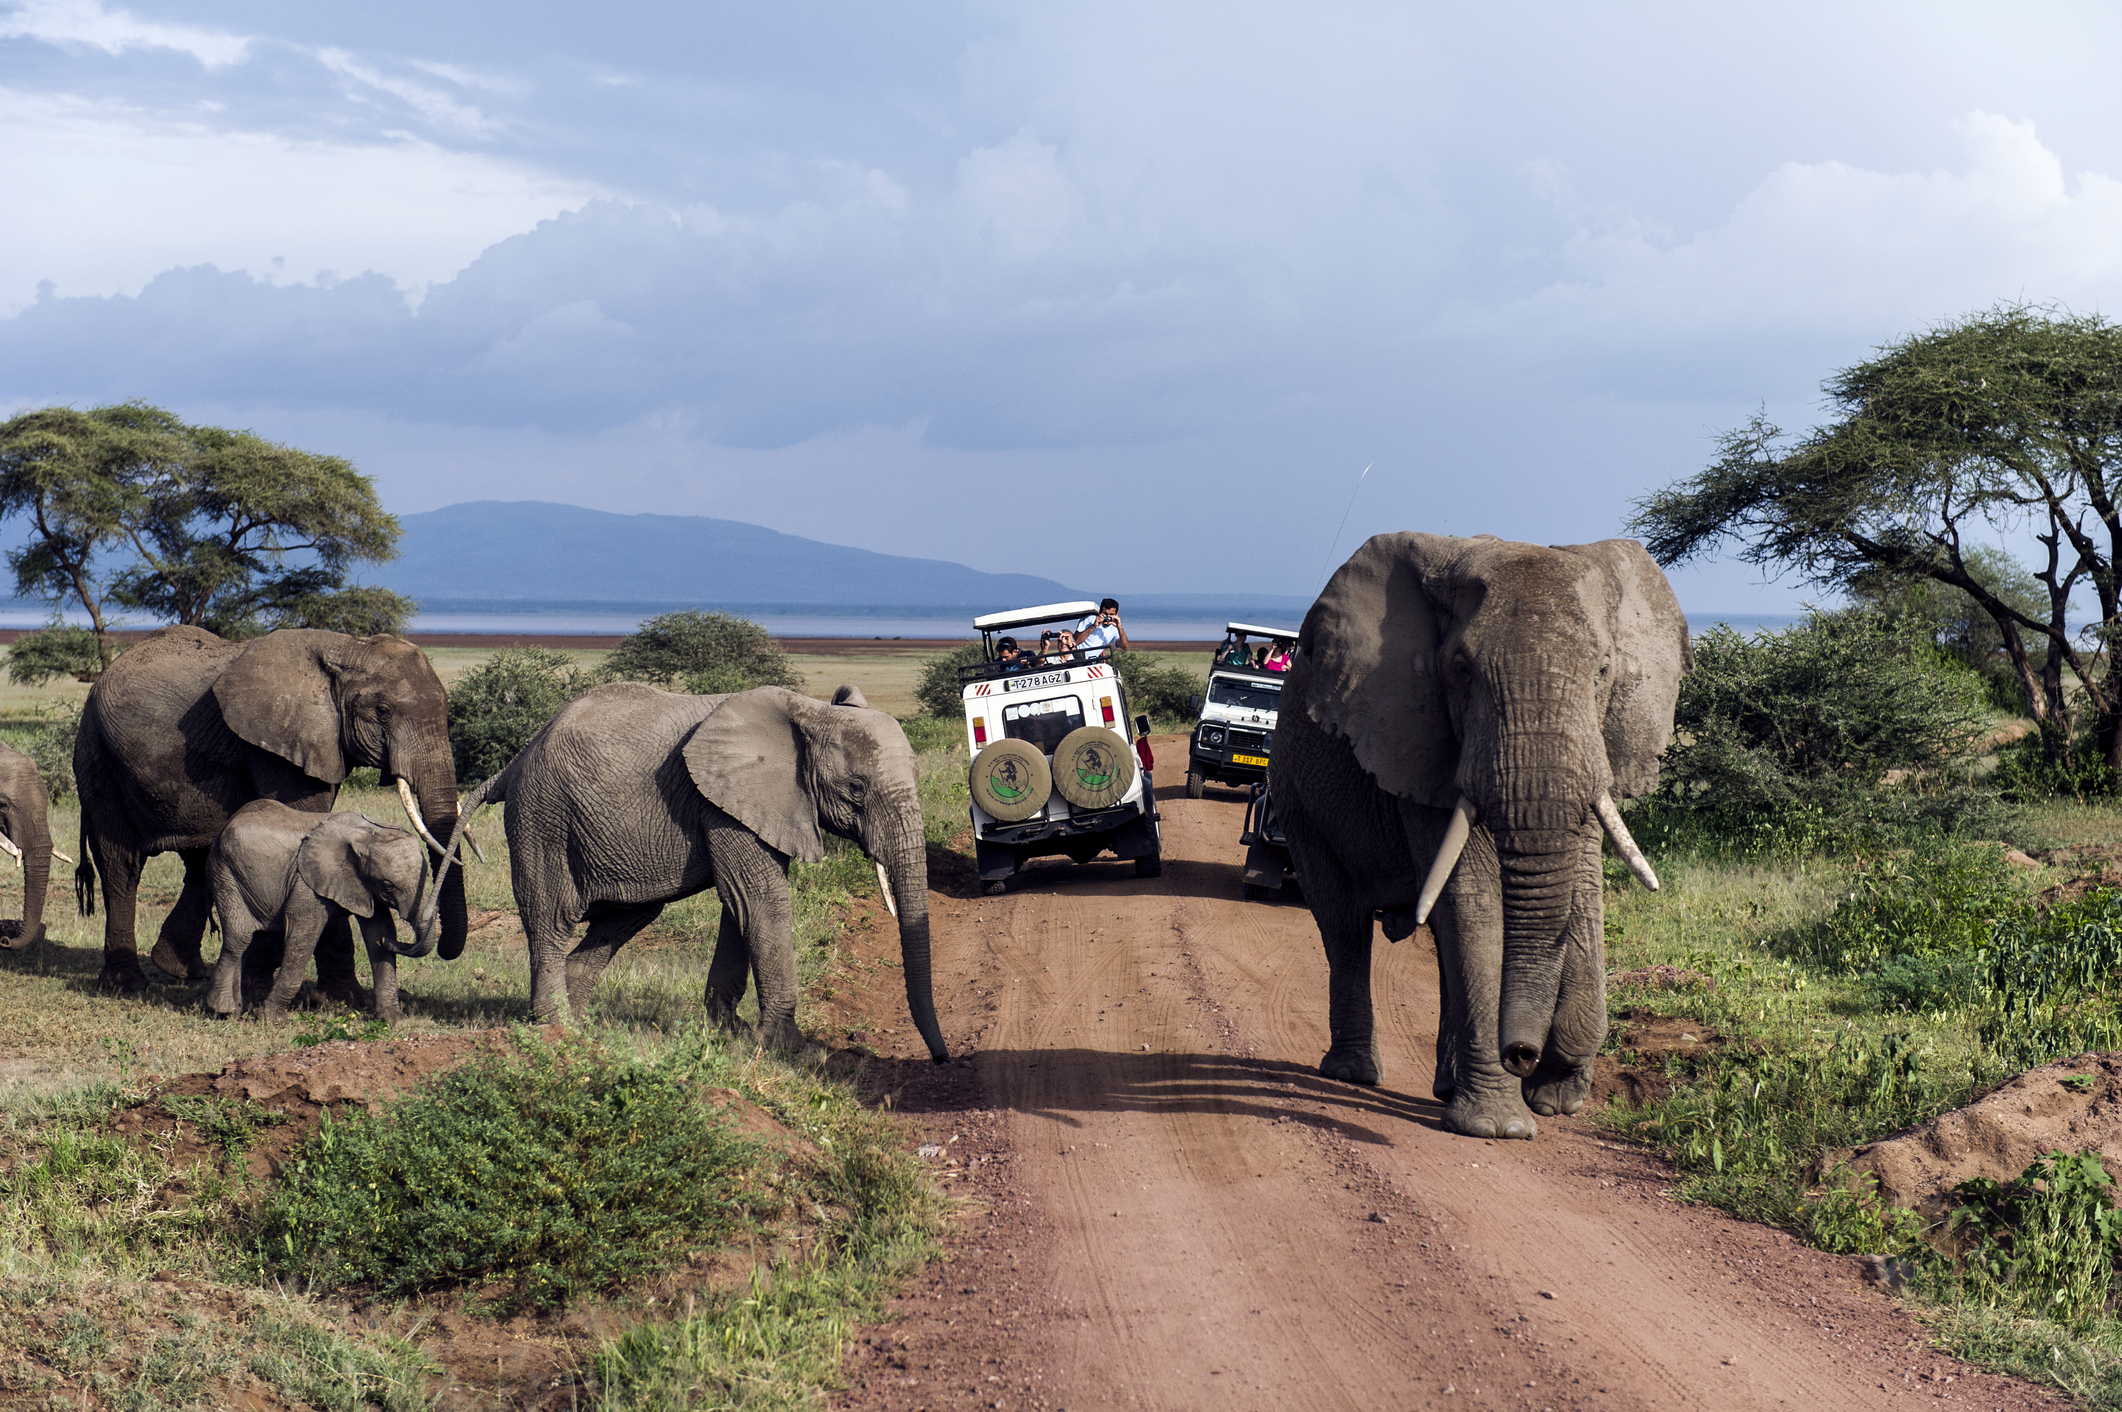 Cars on safari as elephants cross the road